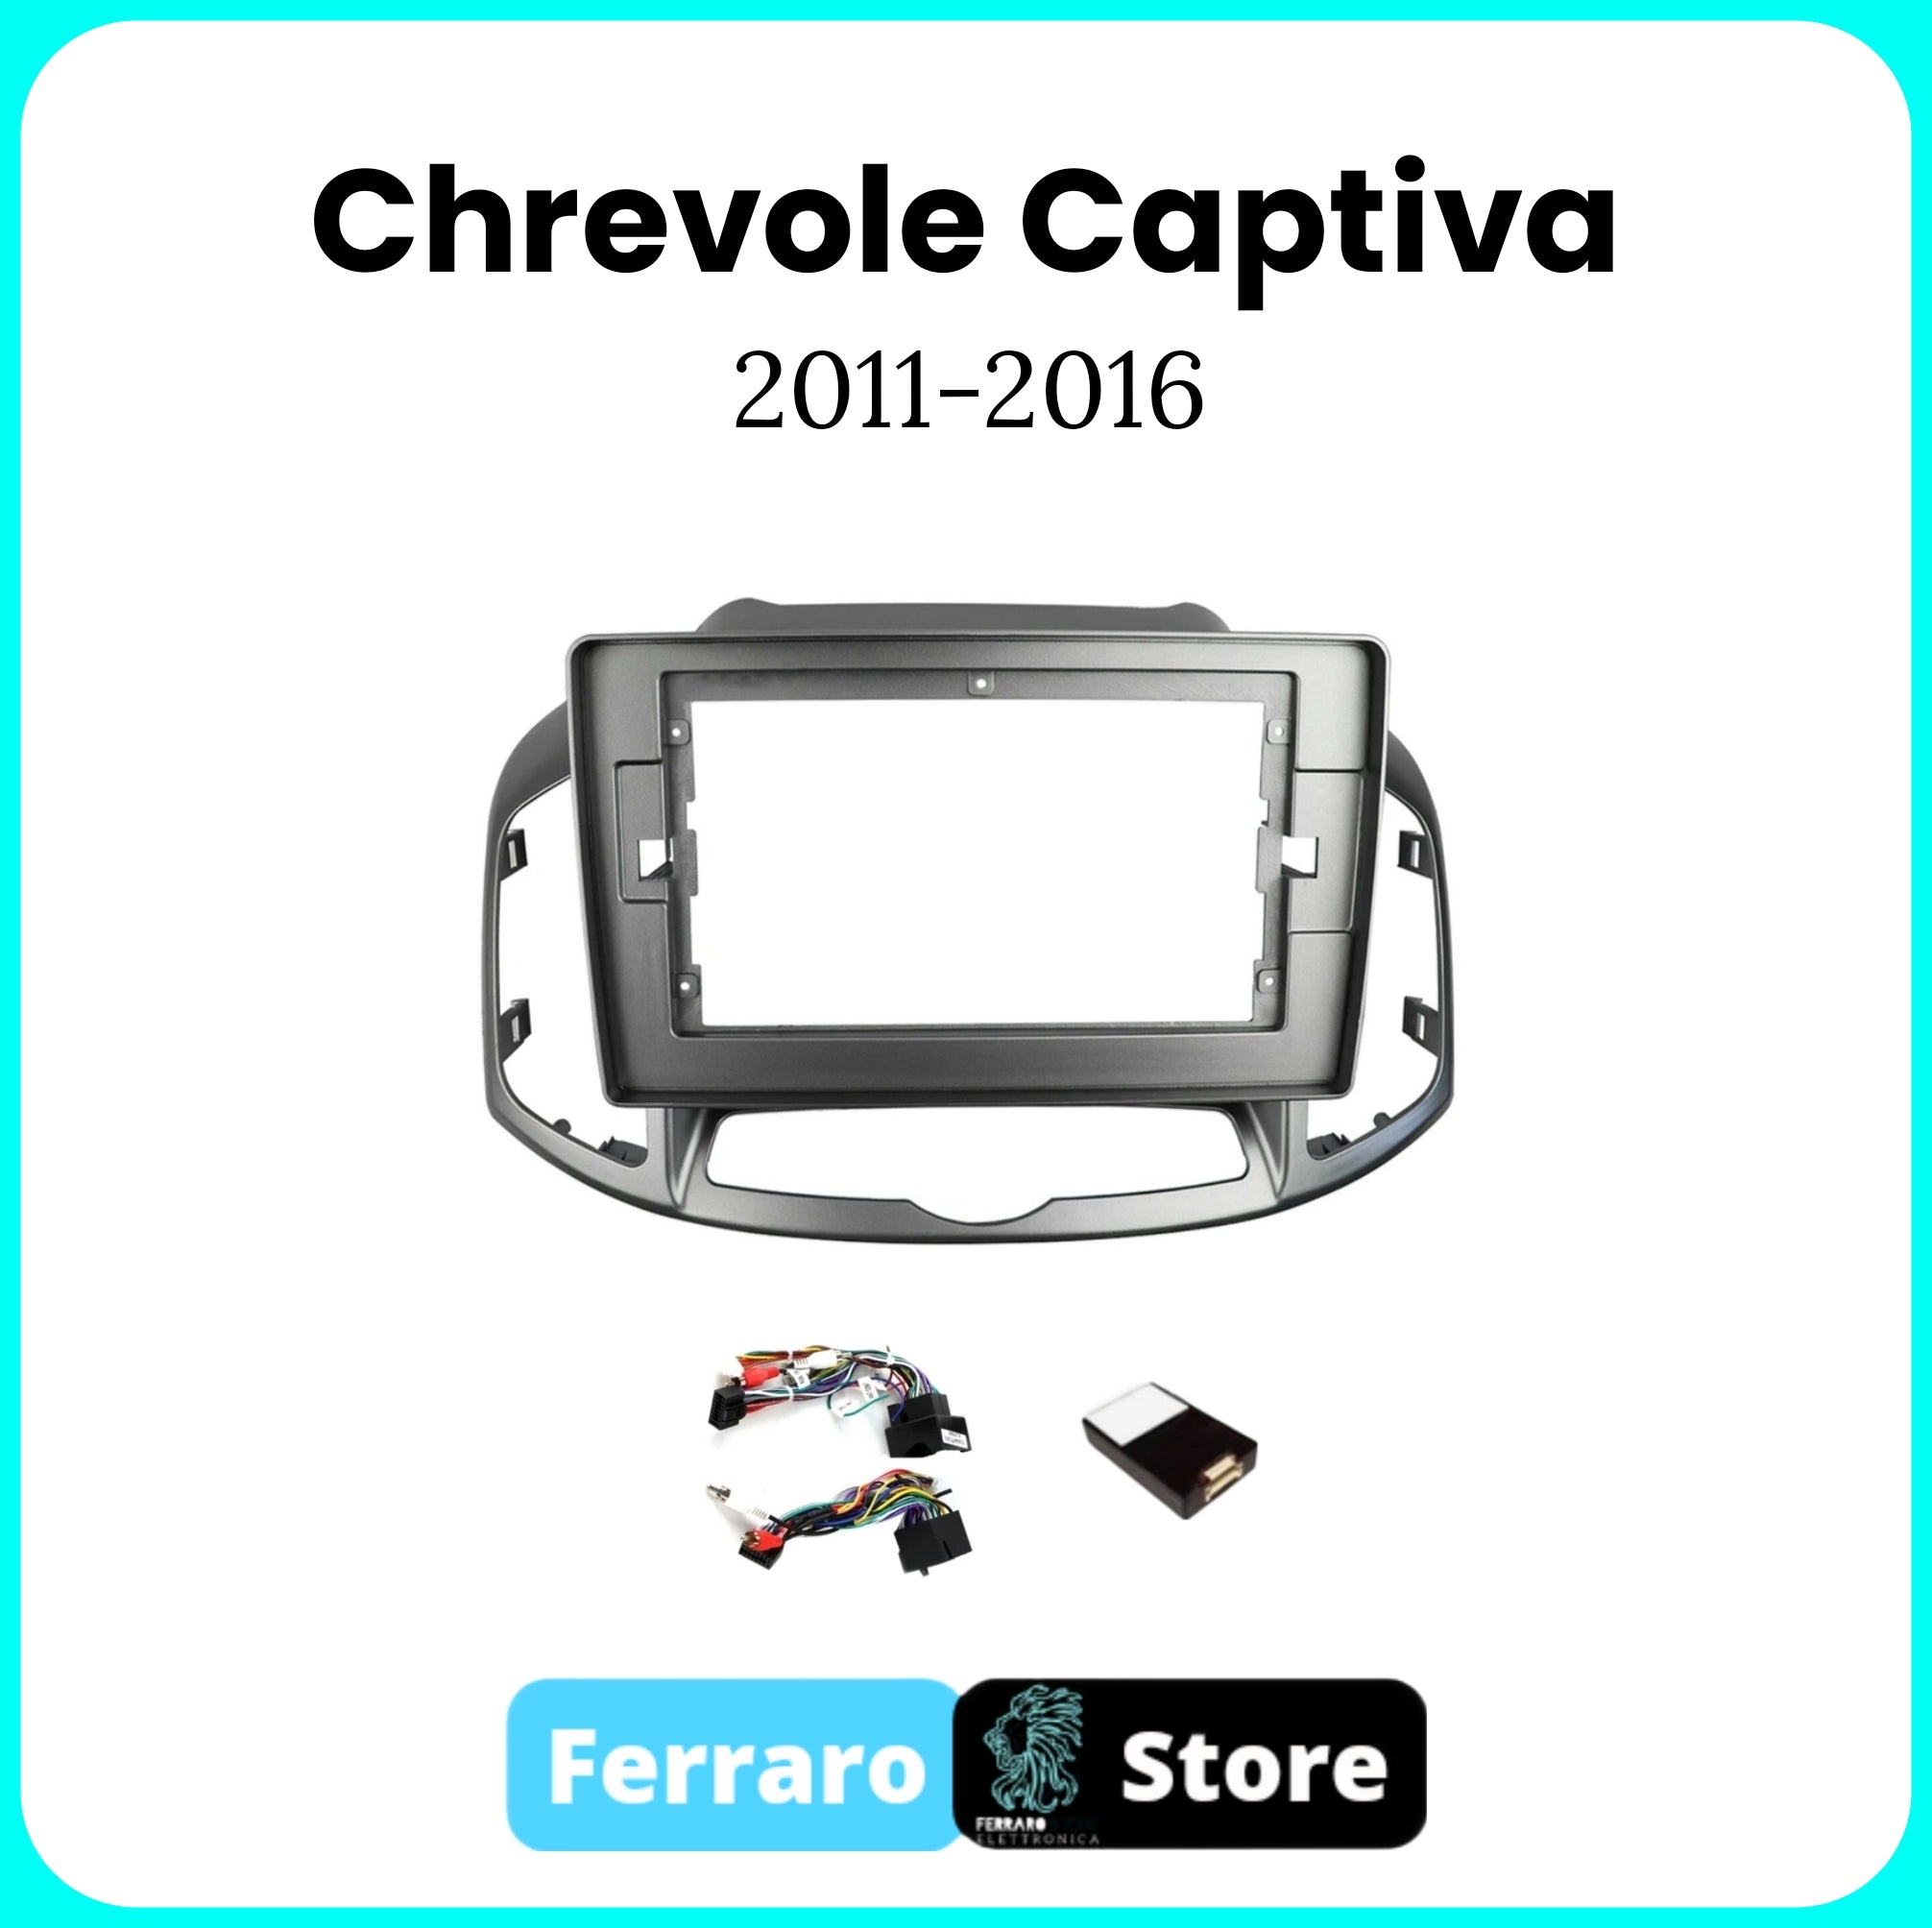 Kit Montaggio Autoradio 10.1"Pollici CHREVOLE CAPTIVA [2011 - 2016] - Mascherina, Cablaggio Autoradio Android